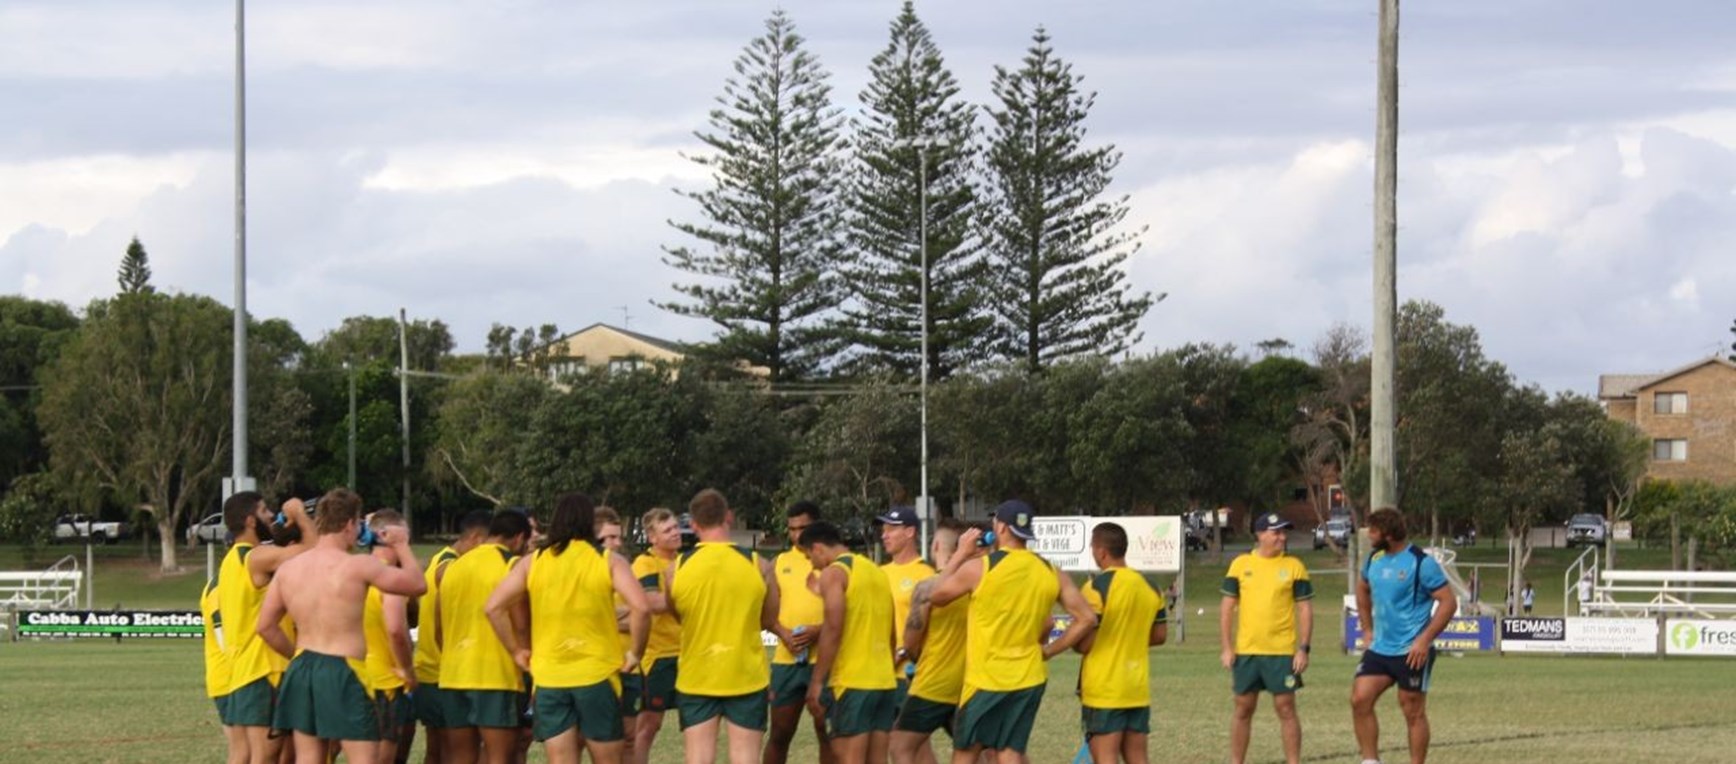 Training session with Junior Kangaroos